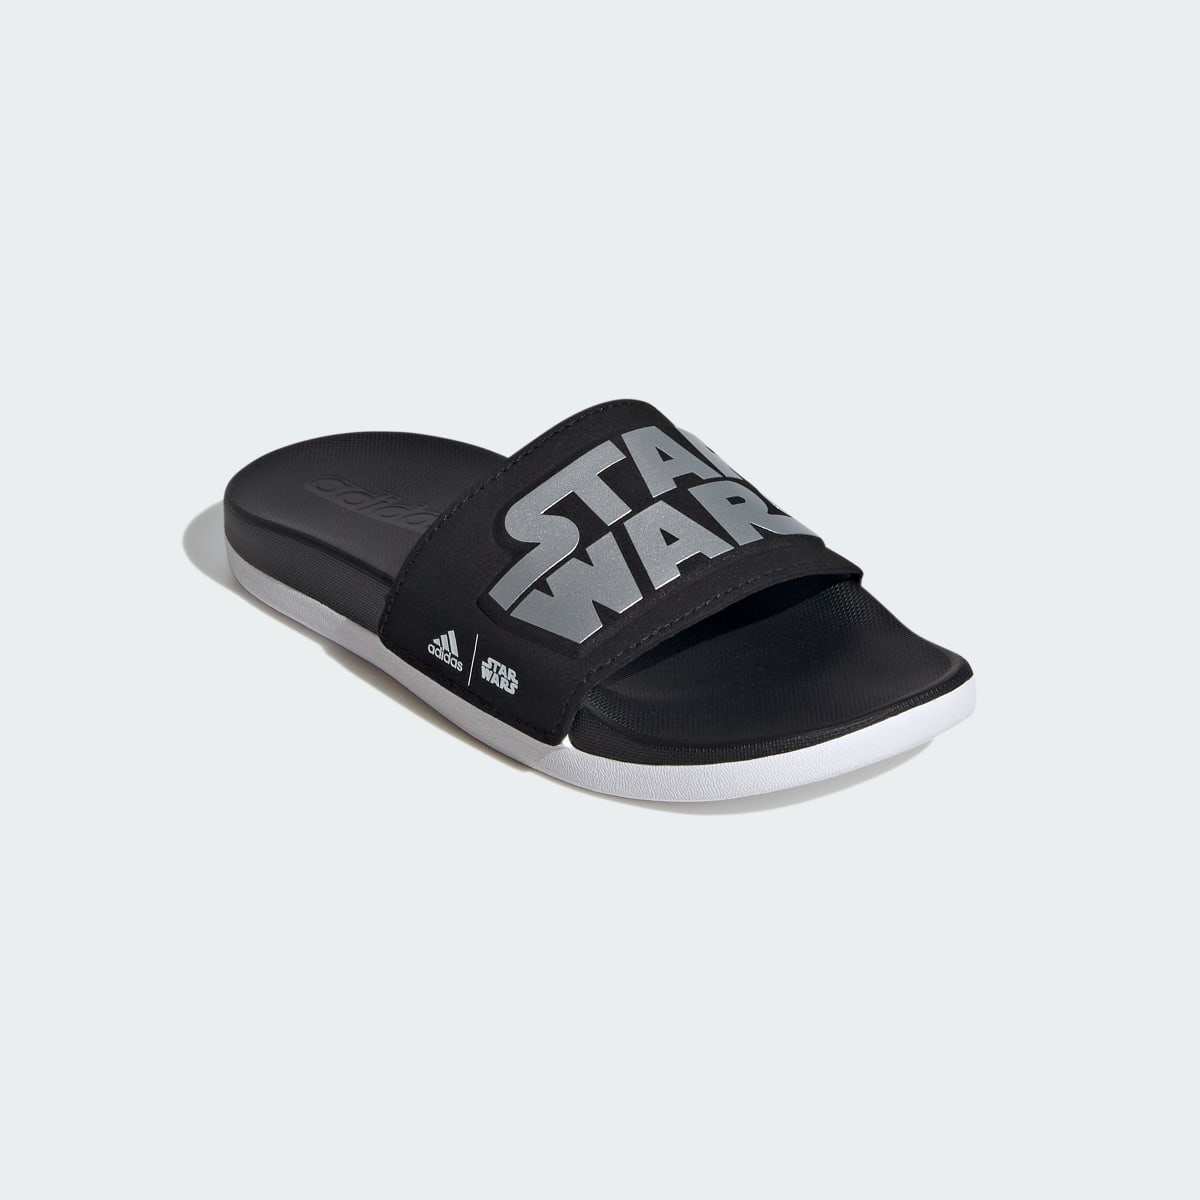 Adidas Chinelos Adilette Comfort Star Wars – Criança. 5